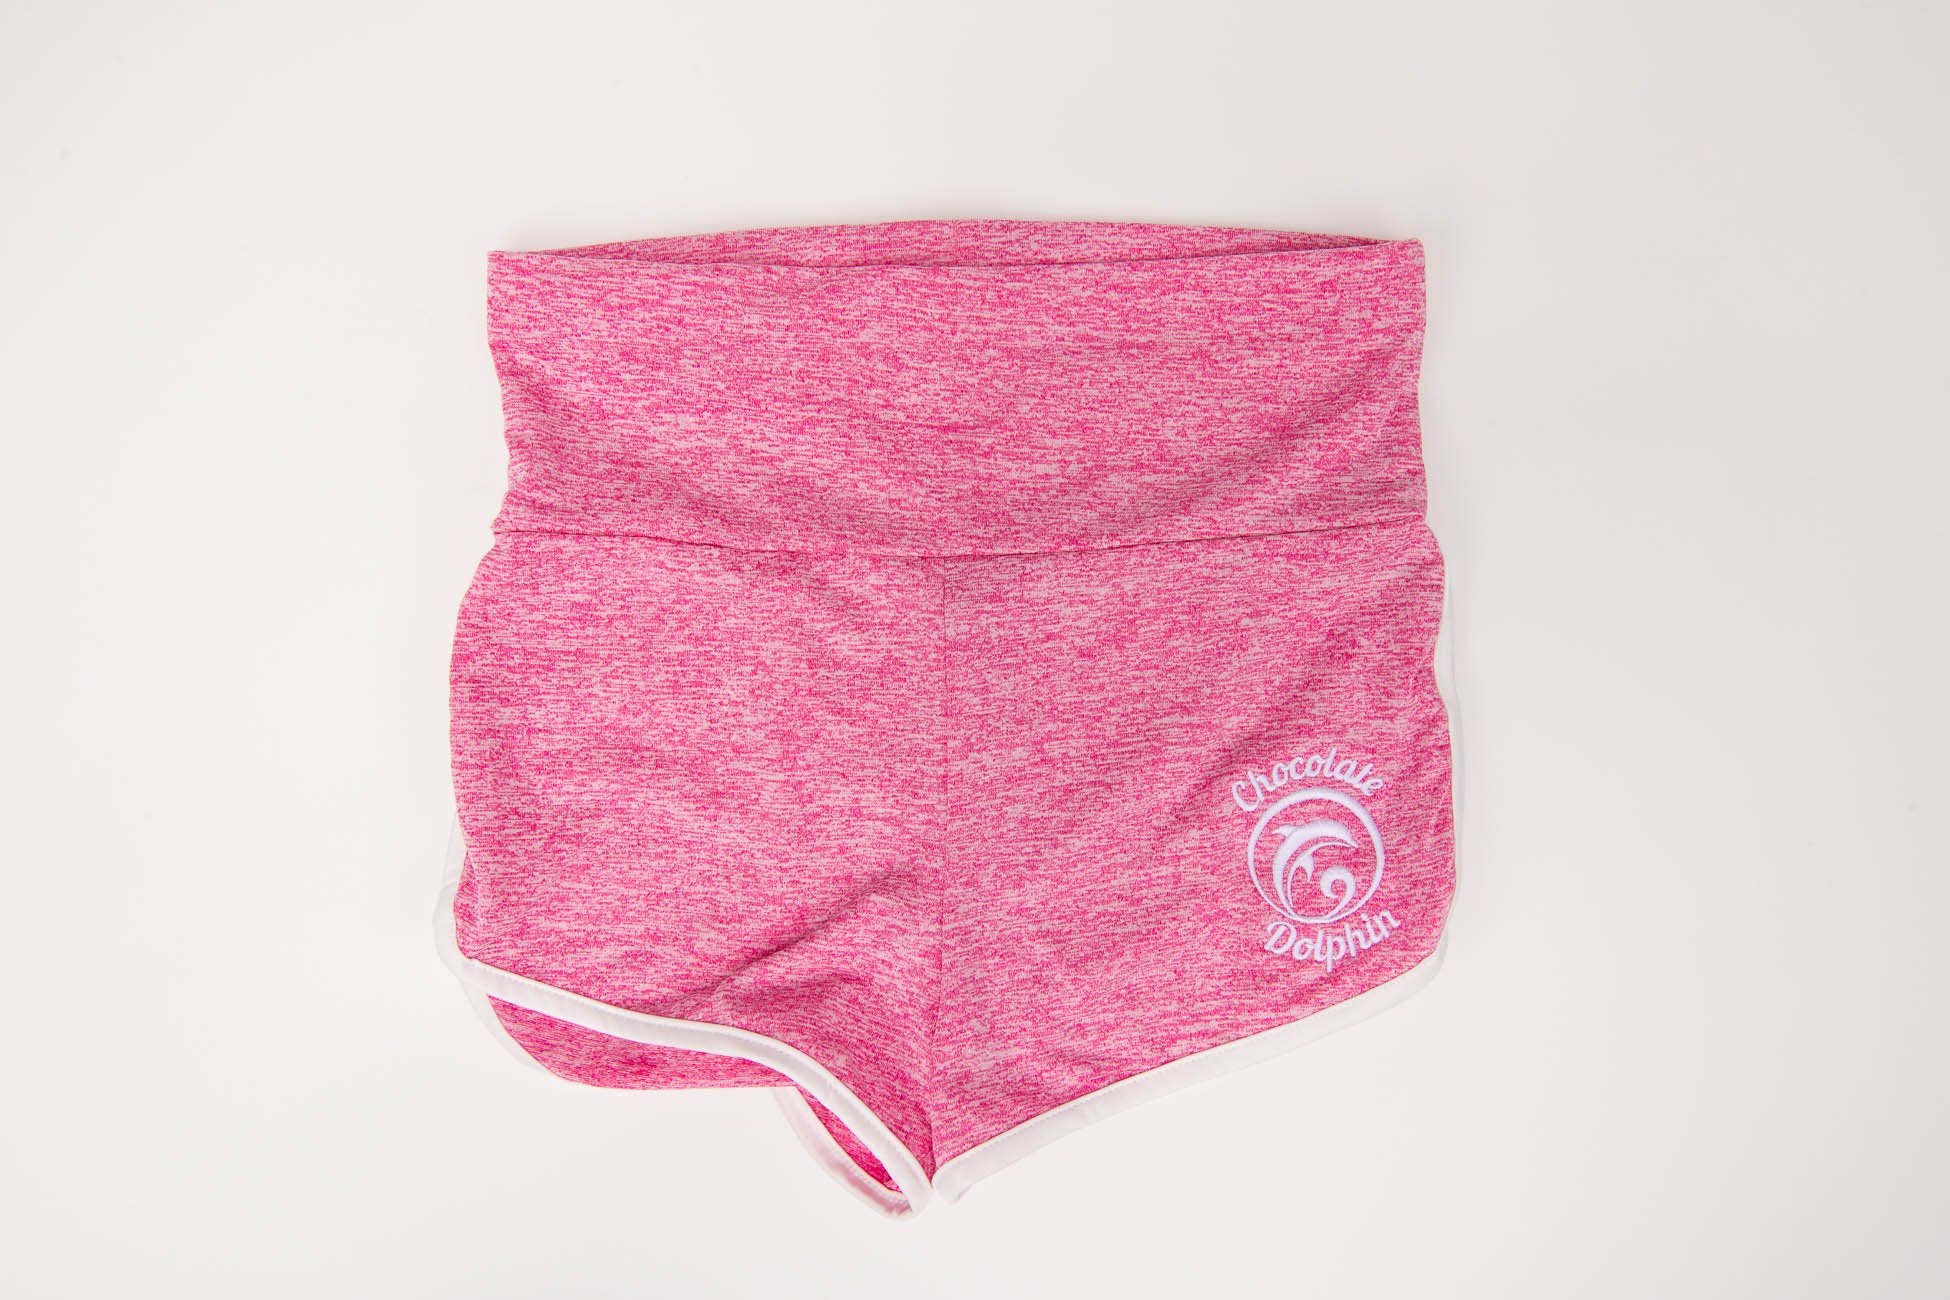 Pink Scrunch Shorts